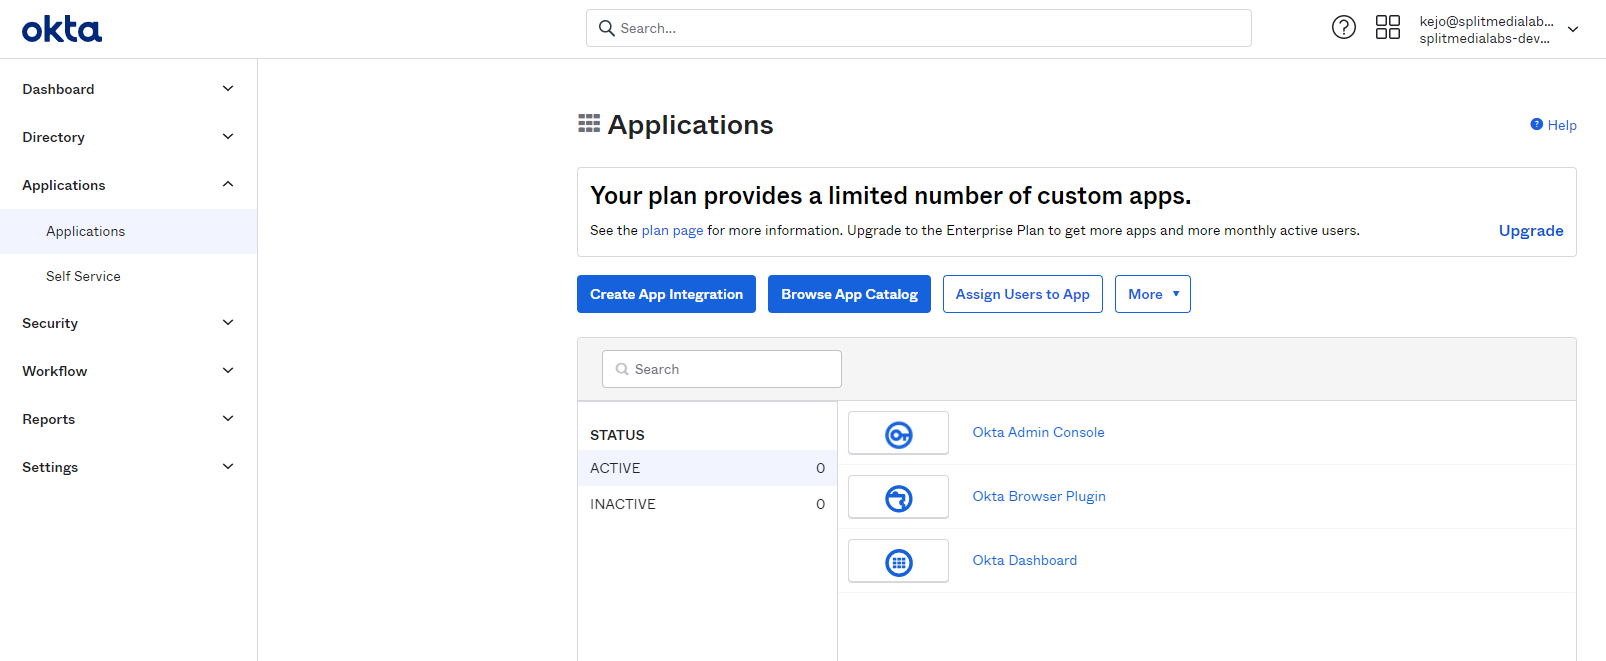 OKTA > Applications > Create App Integrations Option